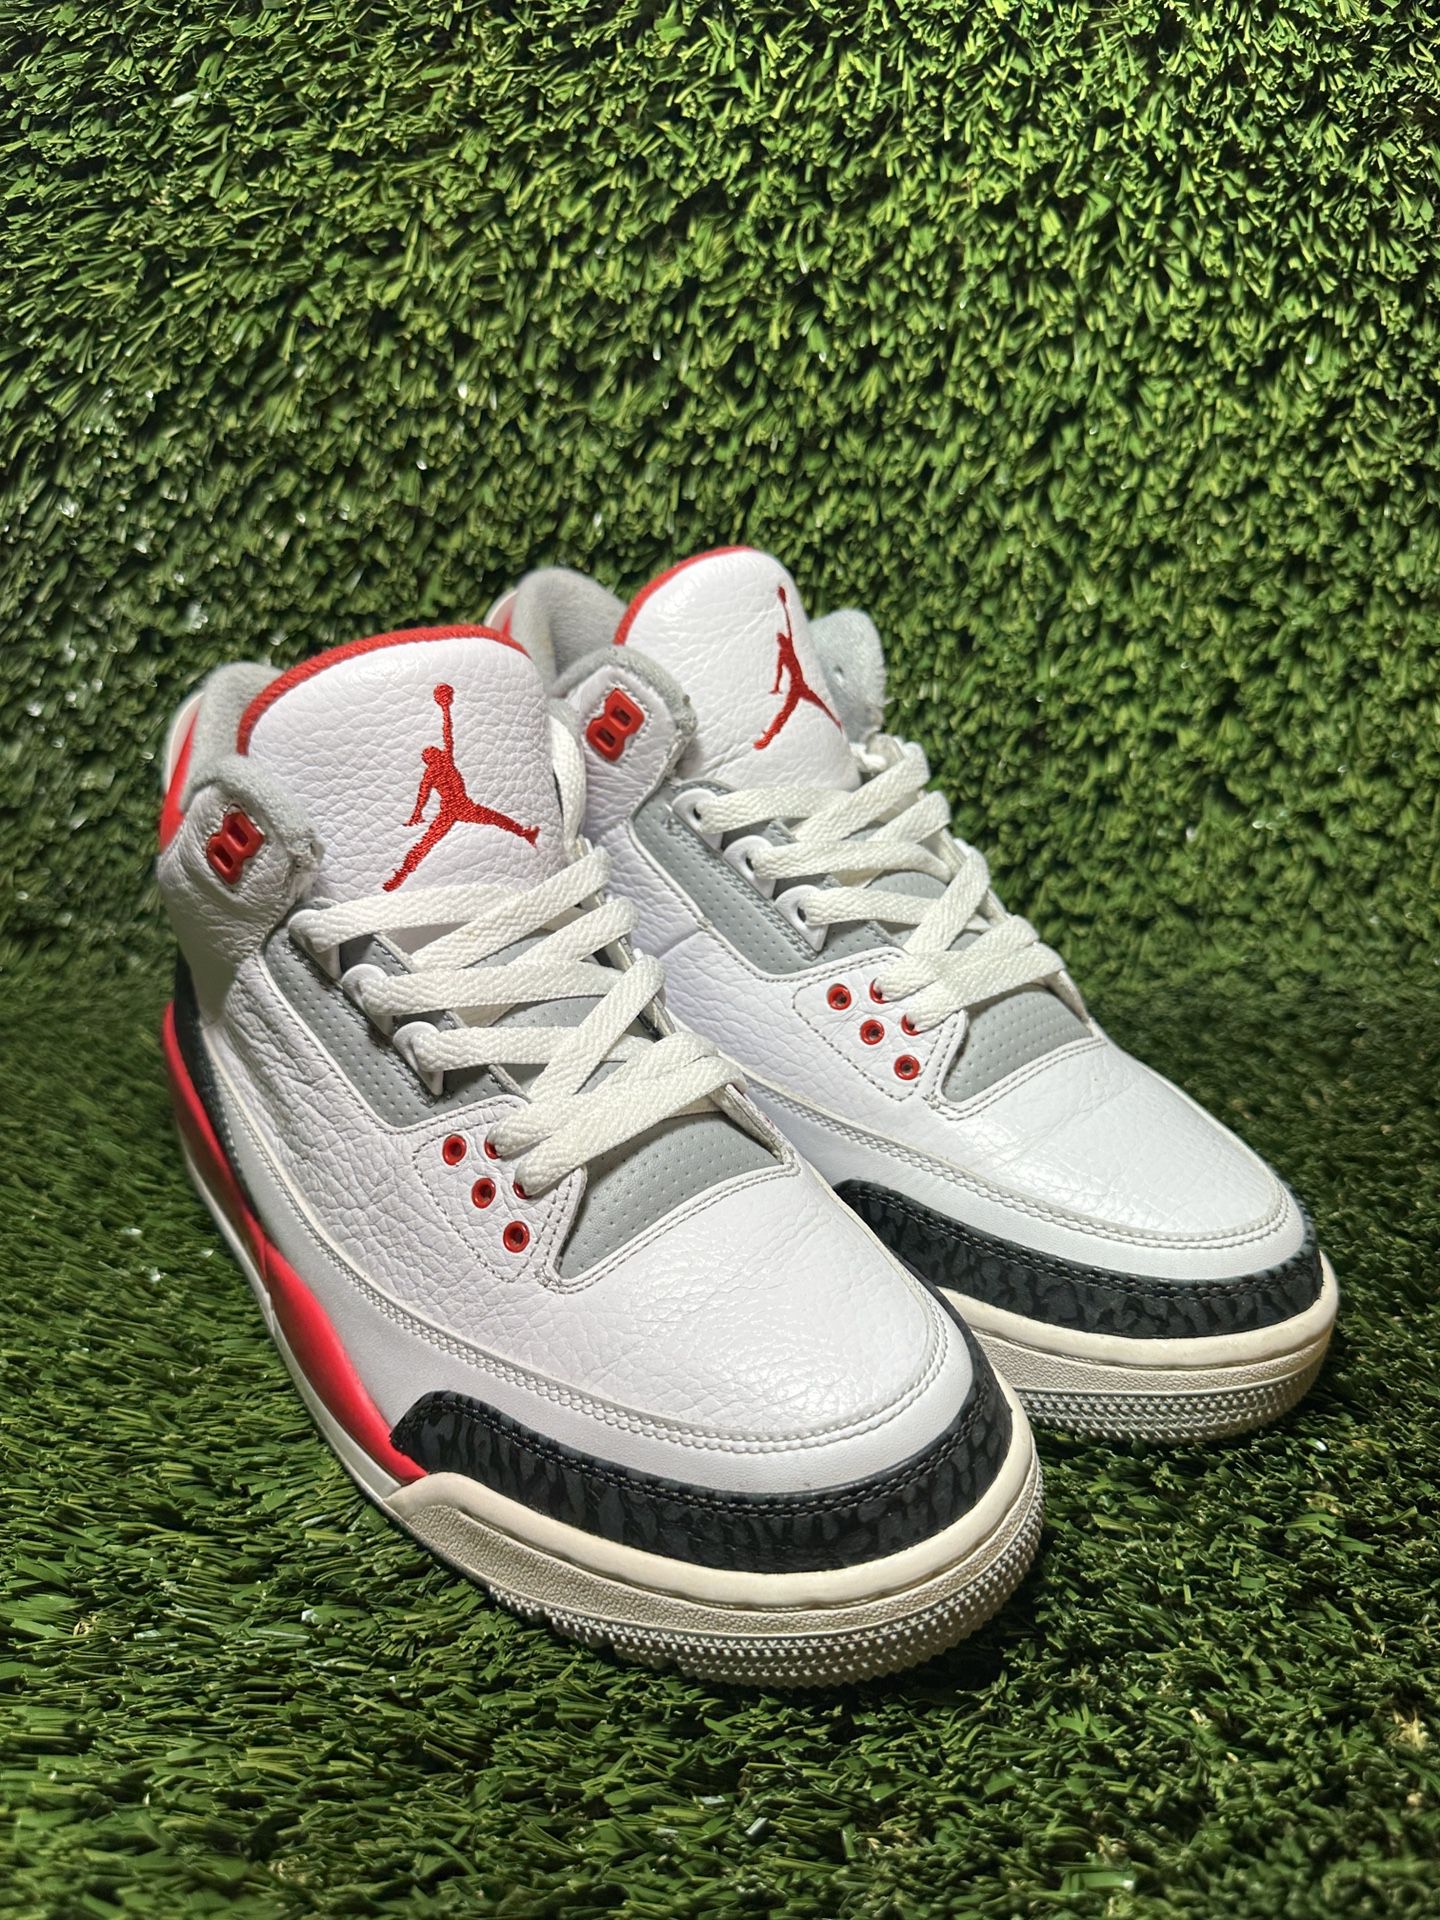 Nike Air Jordan 3 Retro Fire Red 2013 Pre-Owned 136064 120 Mens Size 9